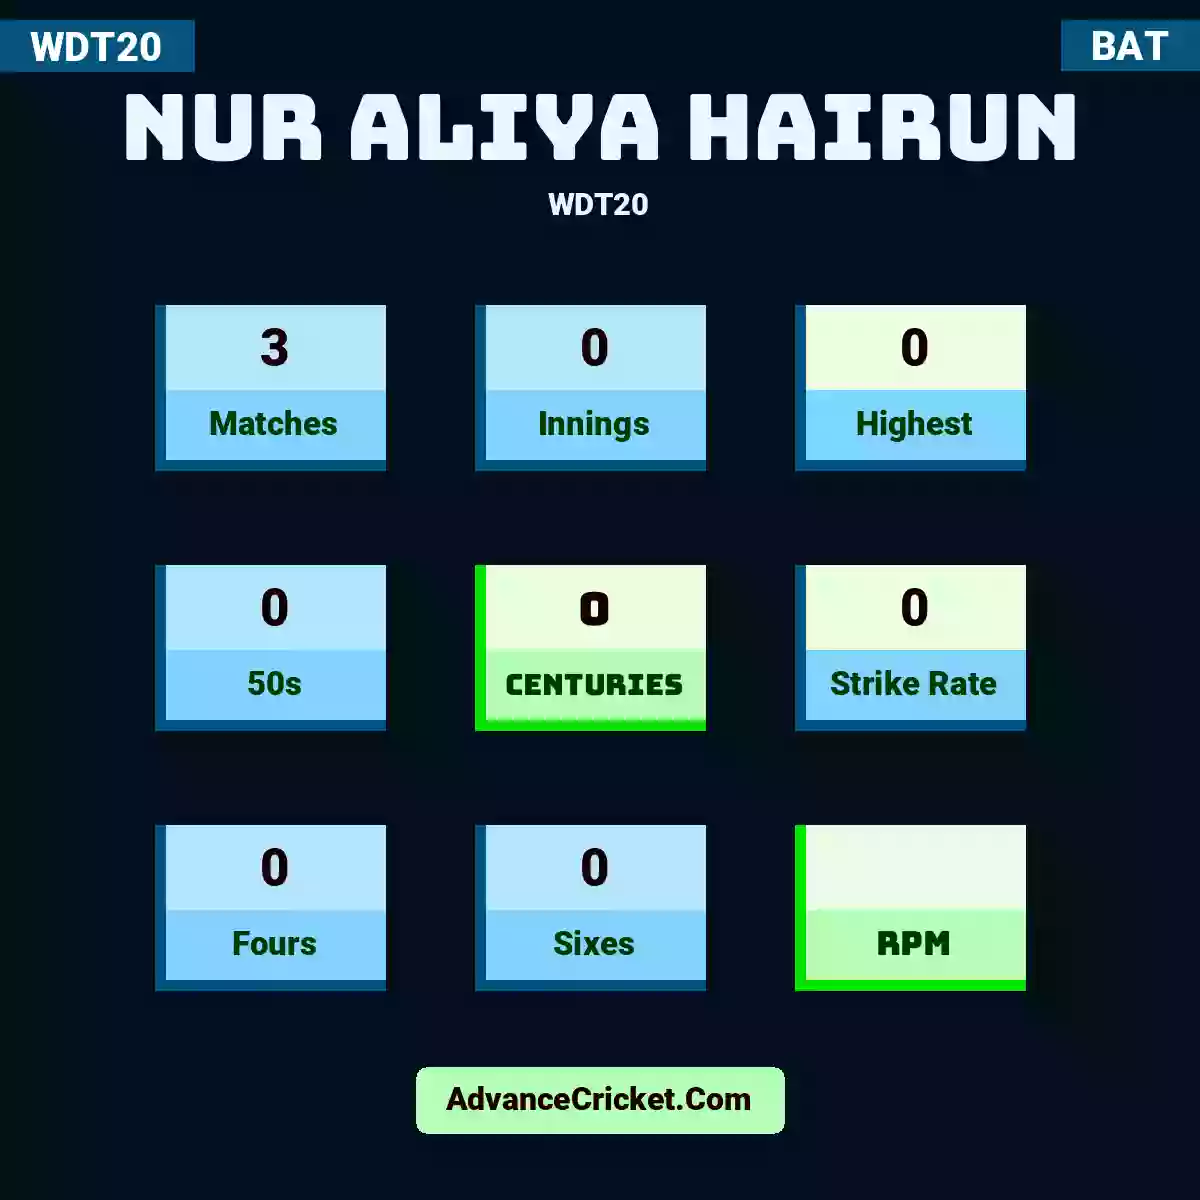 Nur Aliya Hairun WDT20 , Nur Aliya Hairun played 3 matches, scored 0 runs as highest, 0 half-centuries, and 0 centuries, with a strike rate of 0. N.Aliya.Hairun hit 0 fours and 0 sixes.